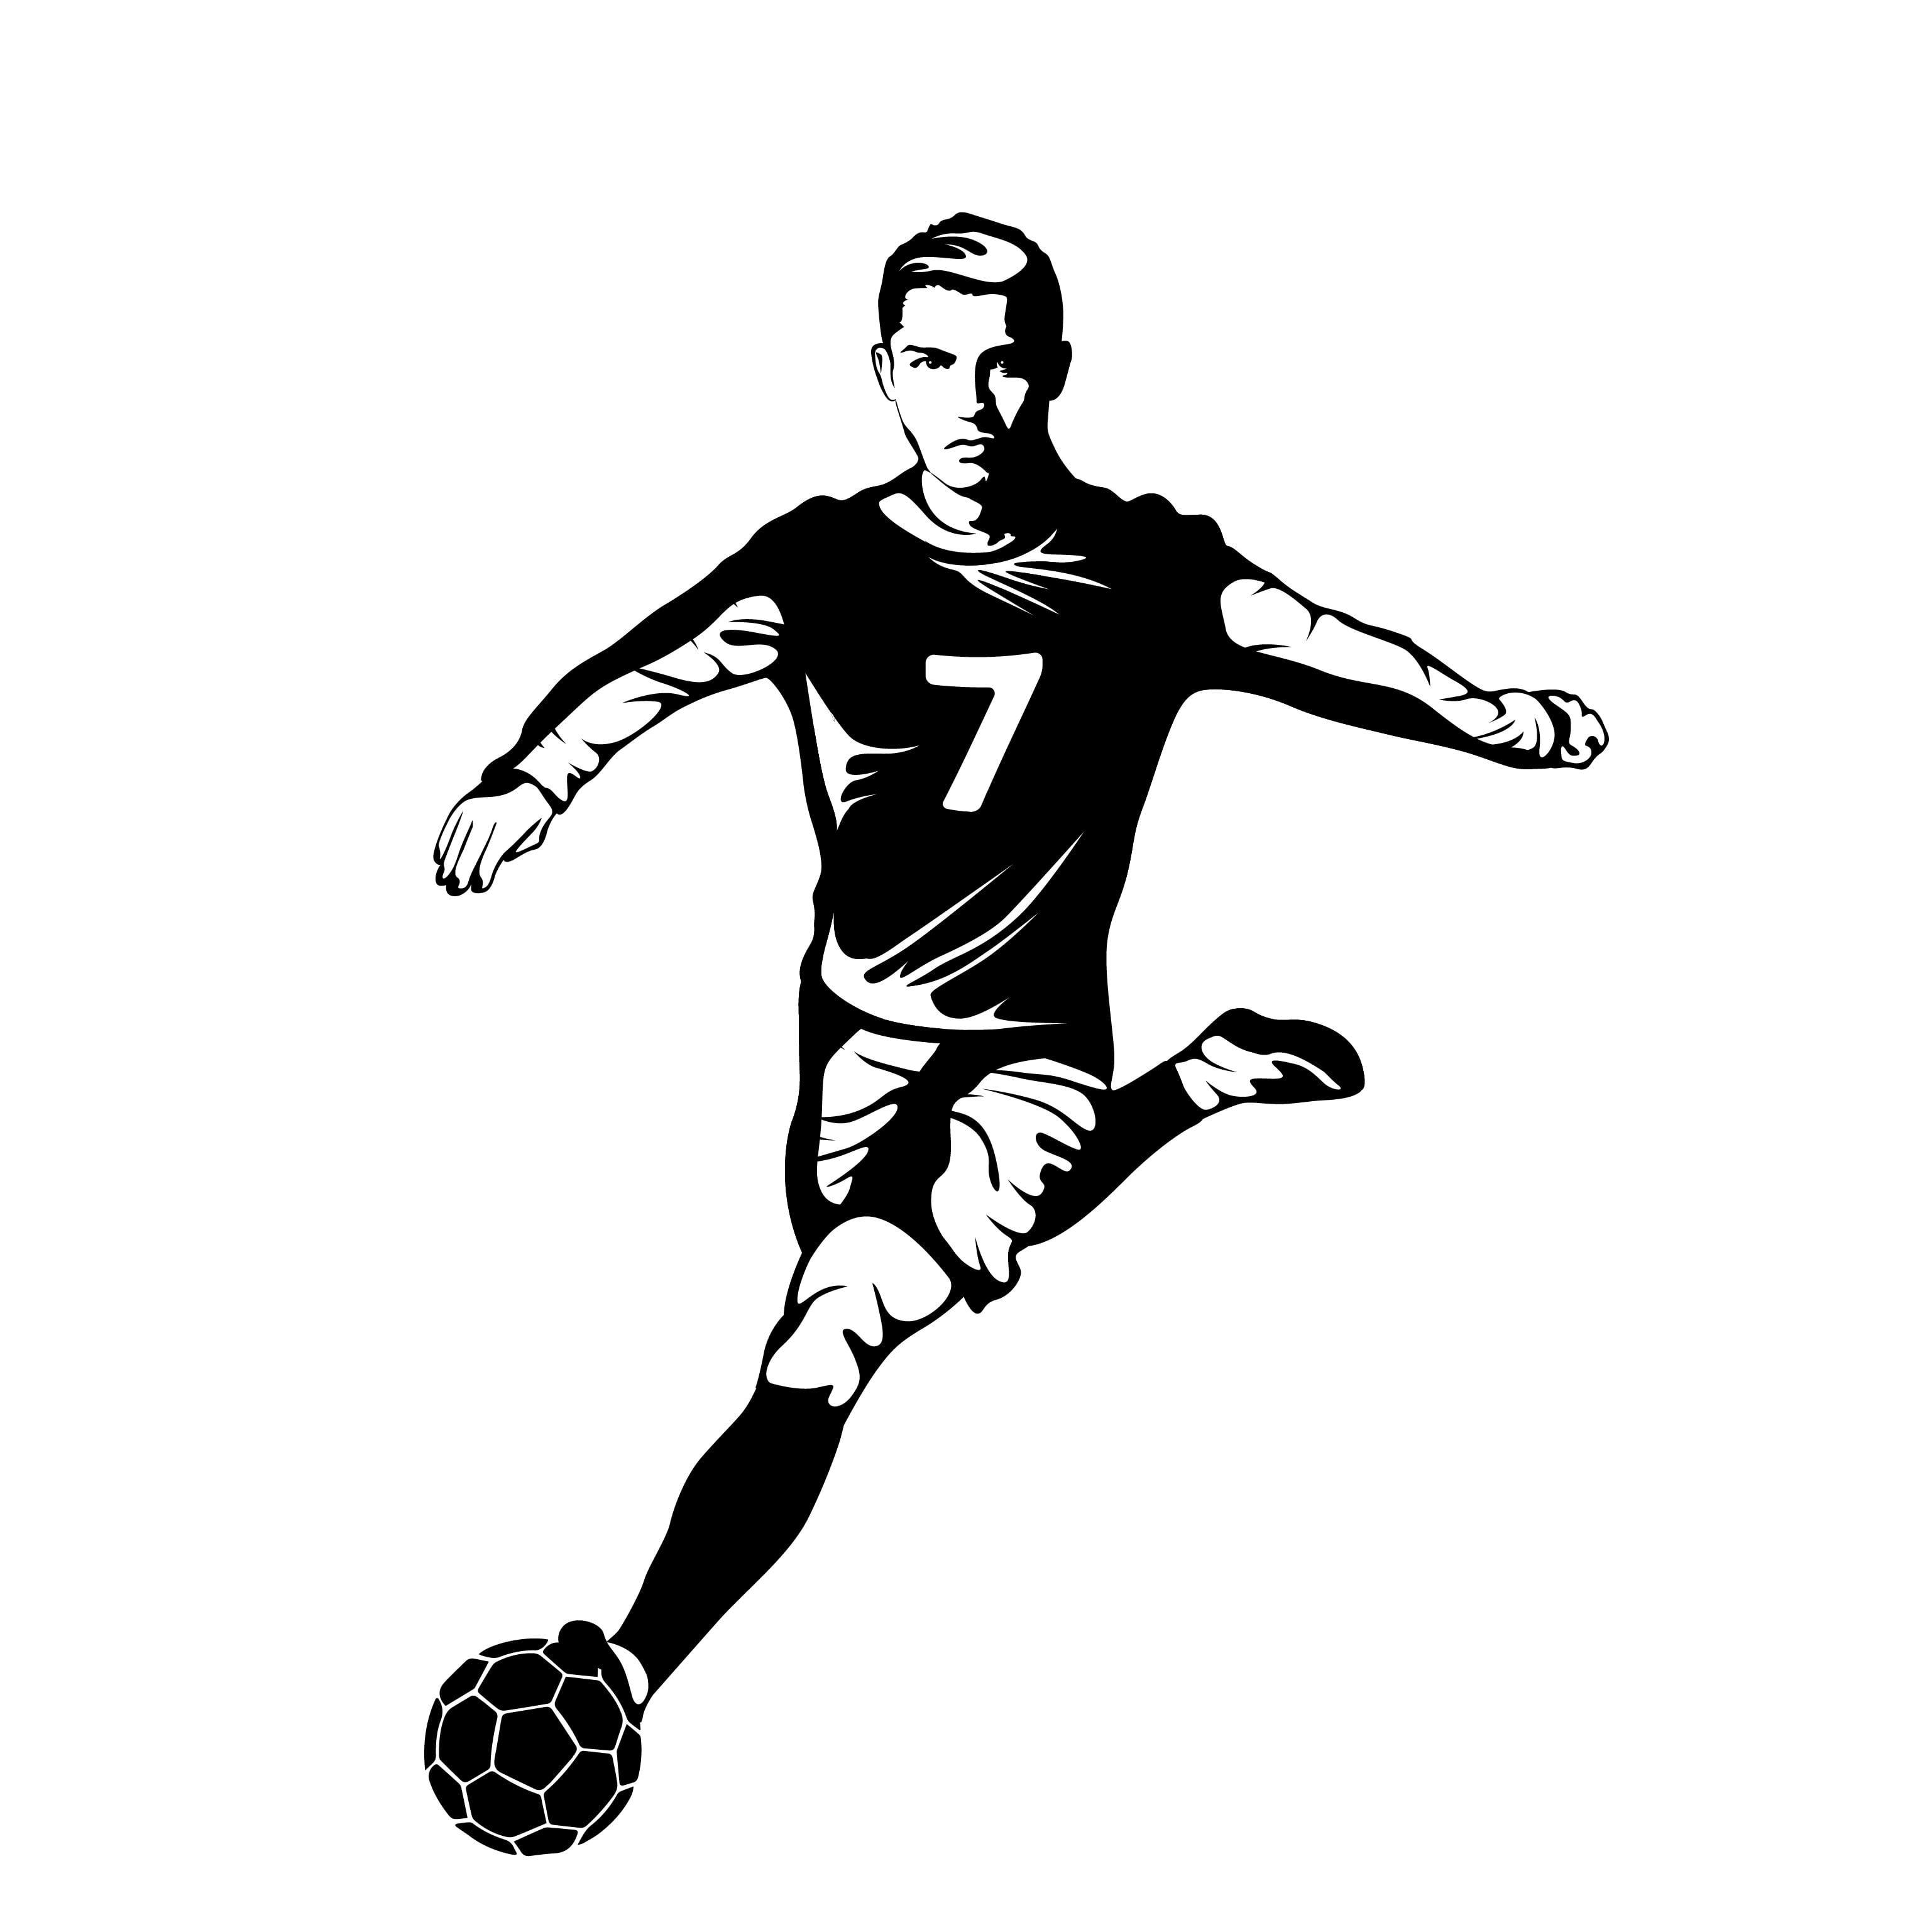 Soccer Player Silhouette Vinyl decal sticker Graphic Die Cut Car Truck 7" 